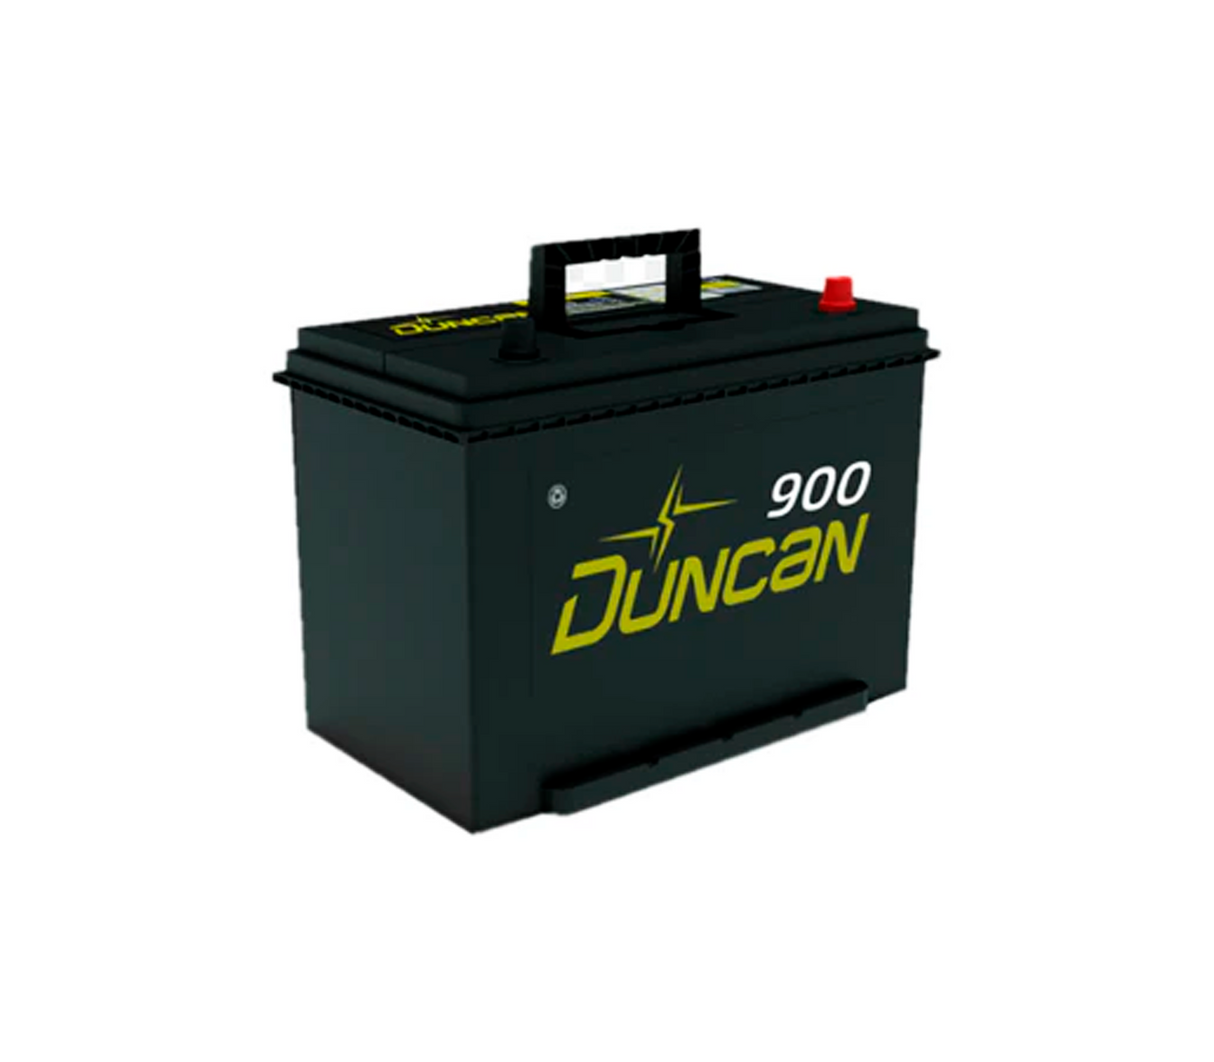 Batería de vehículo D43MR-900 Duncan